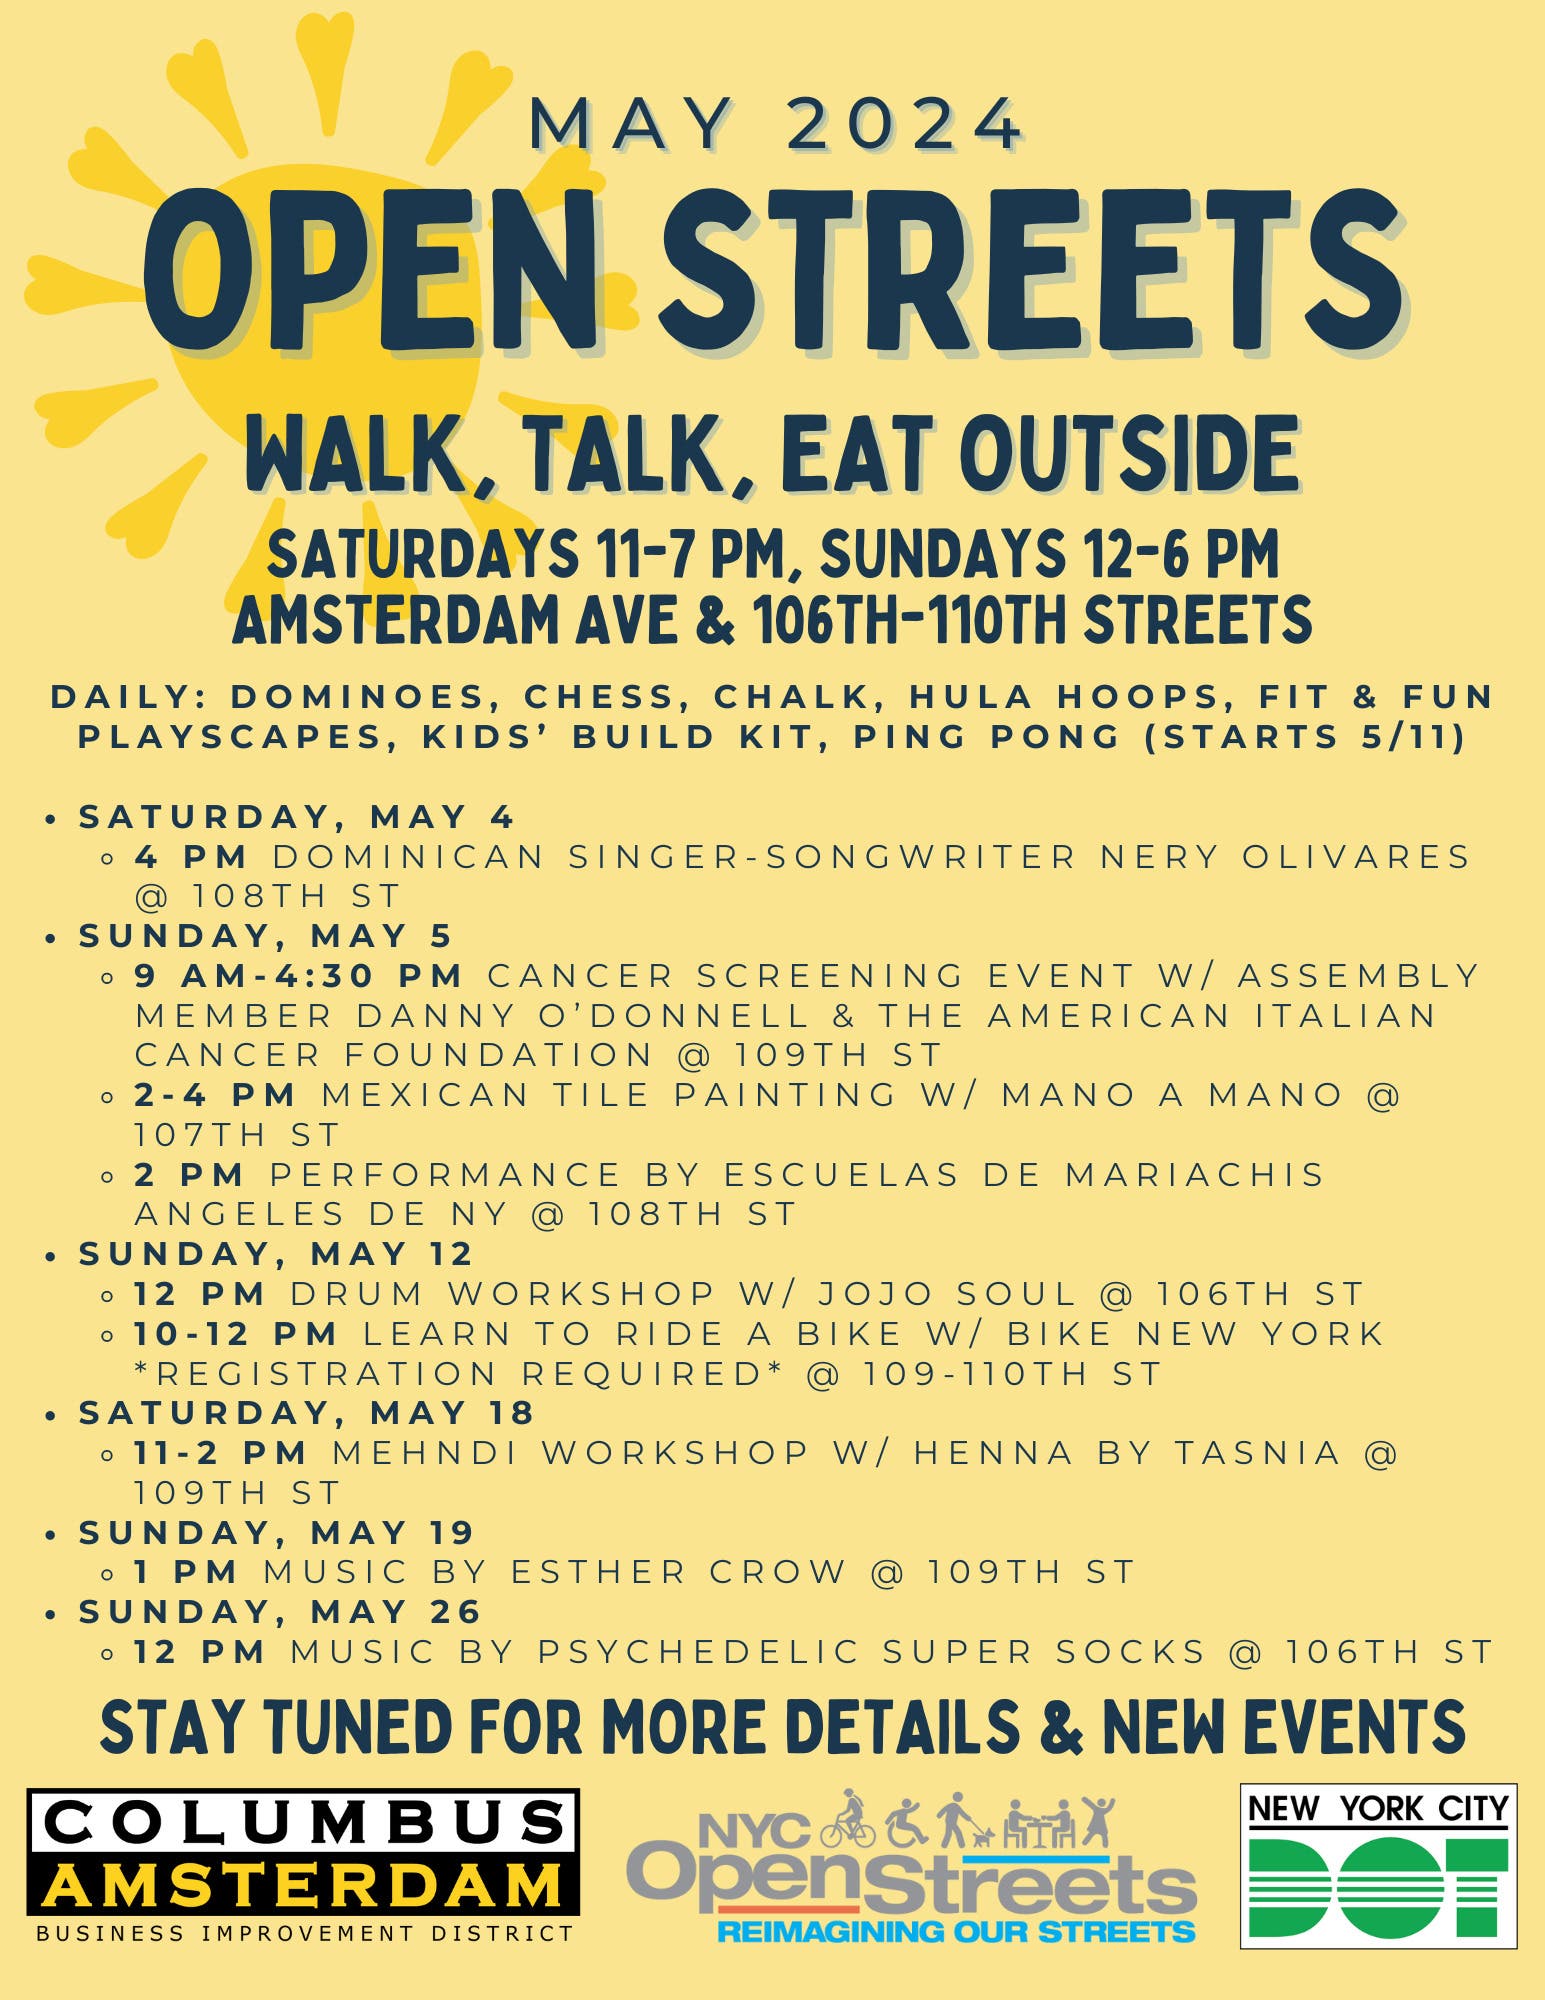 Columbus-Amsterdam BID Open Streets May 2024 FREE EVENTS